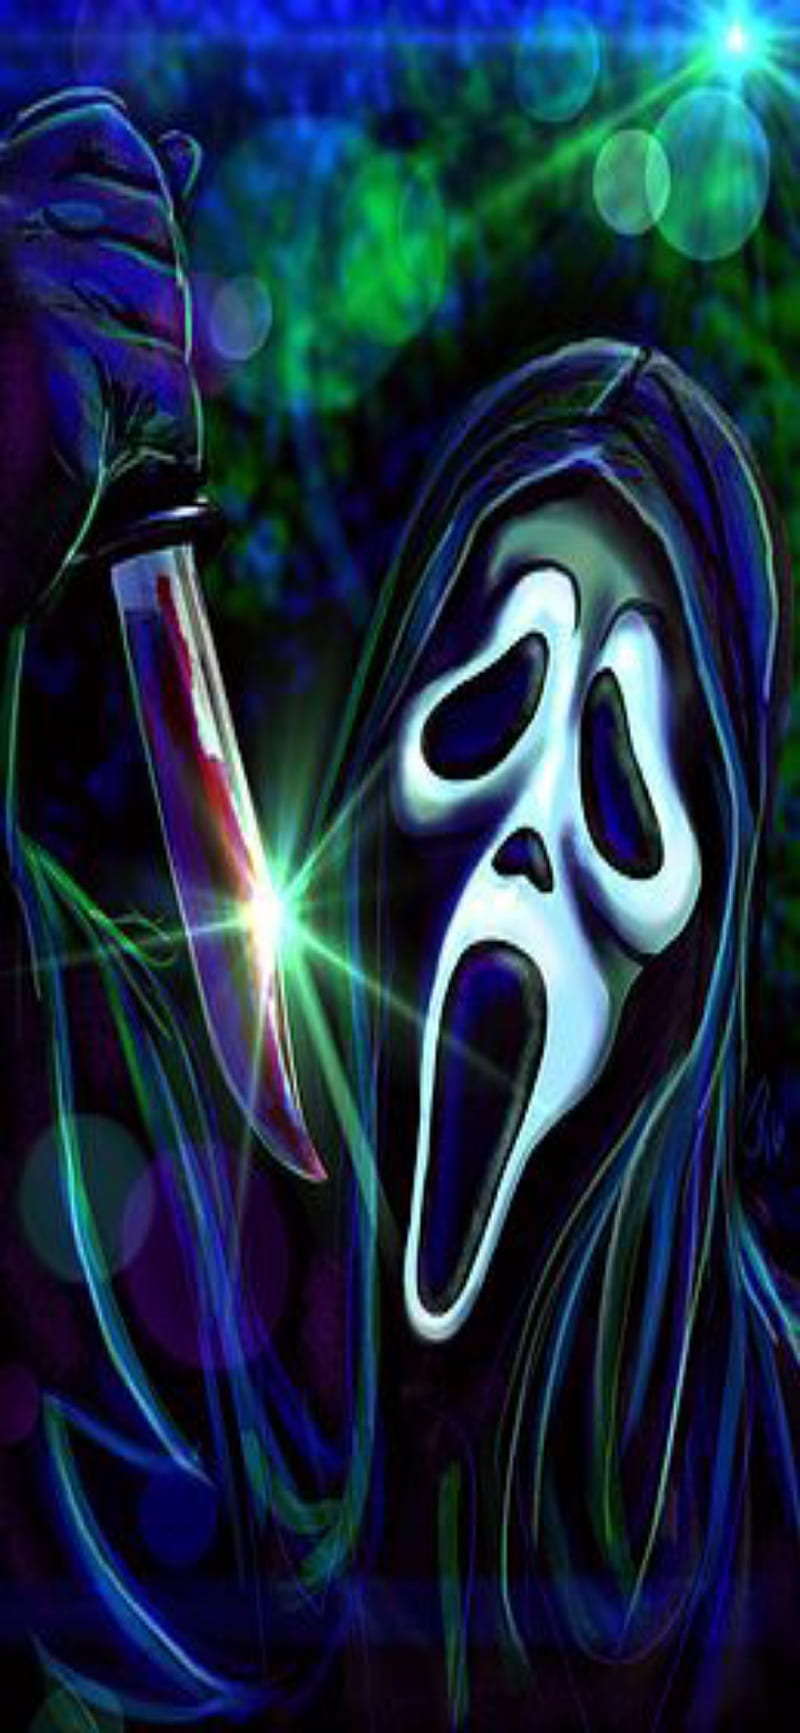 ghostface wallpaper aesthetic  Ghostface wallpaper aesthetic  Halloween wallpaper backgrounds Horror artwork